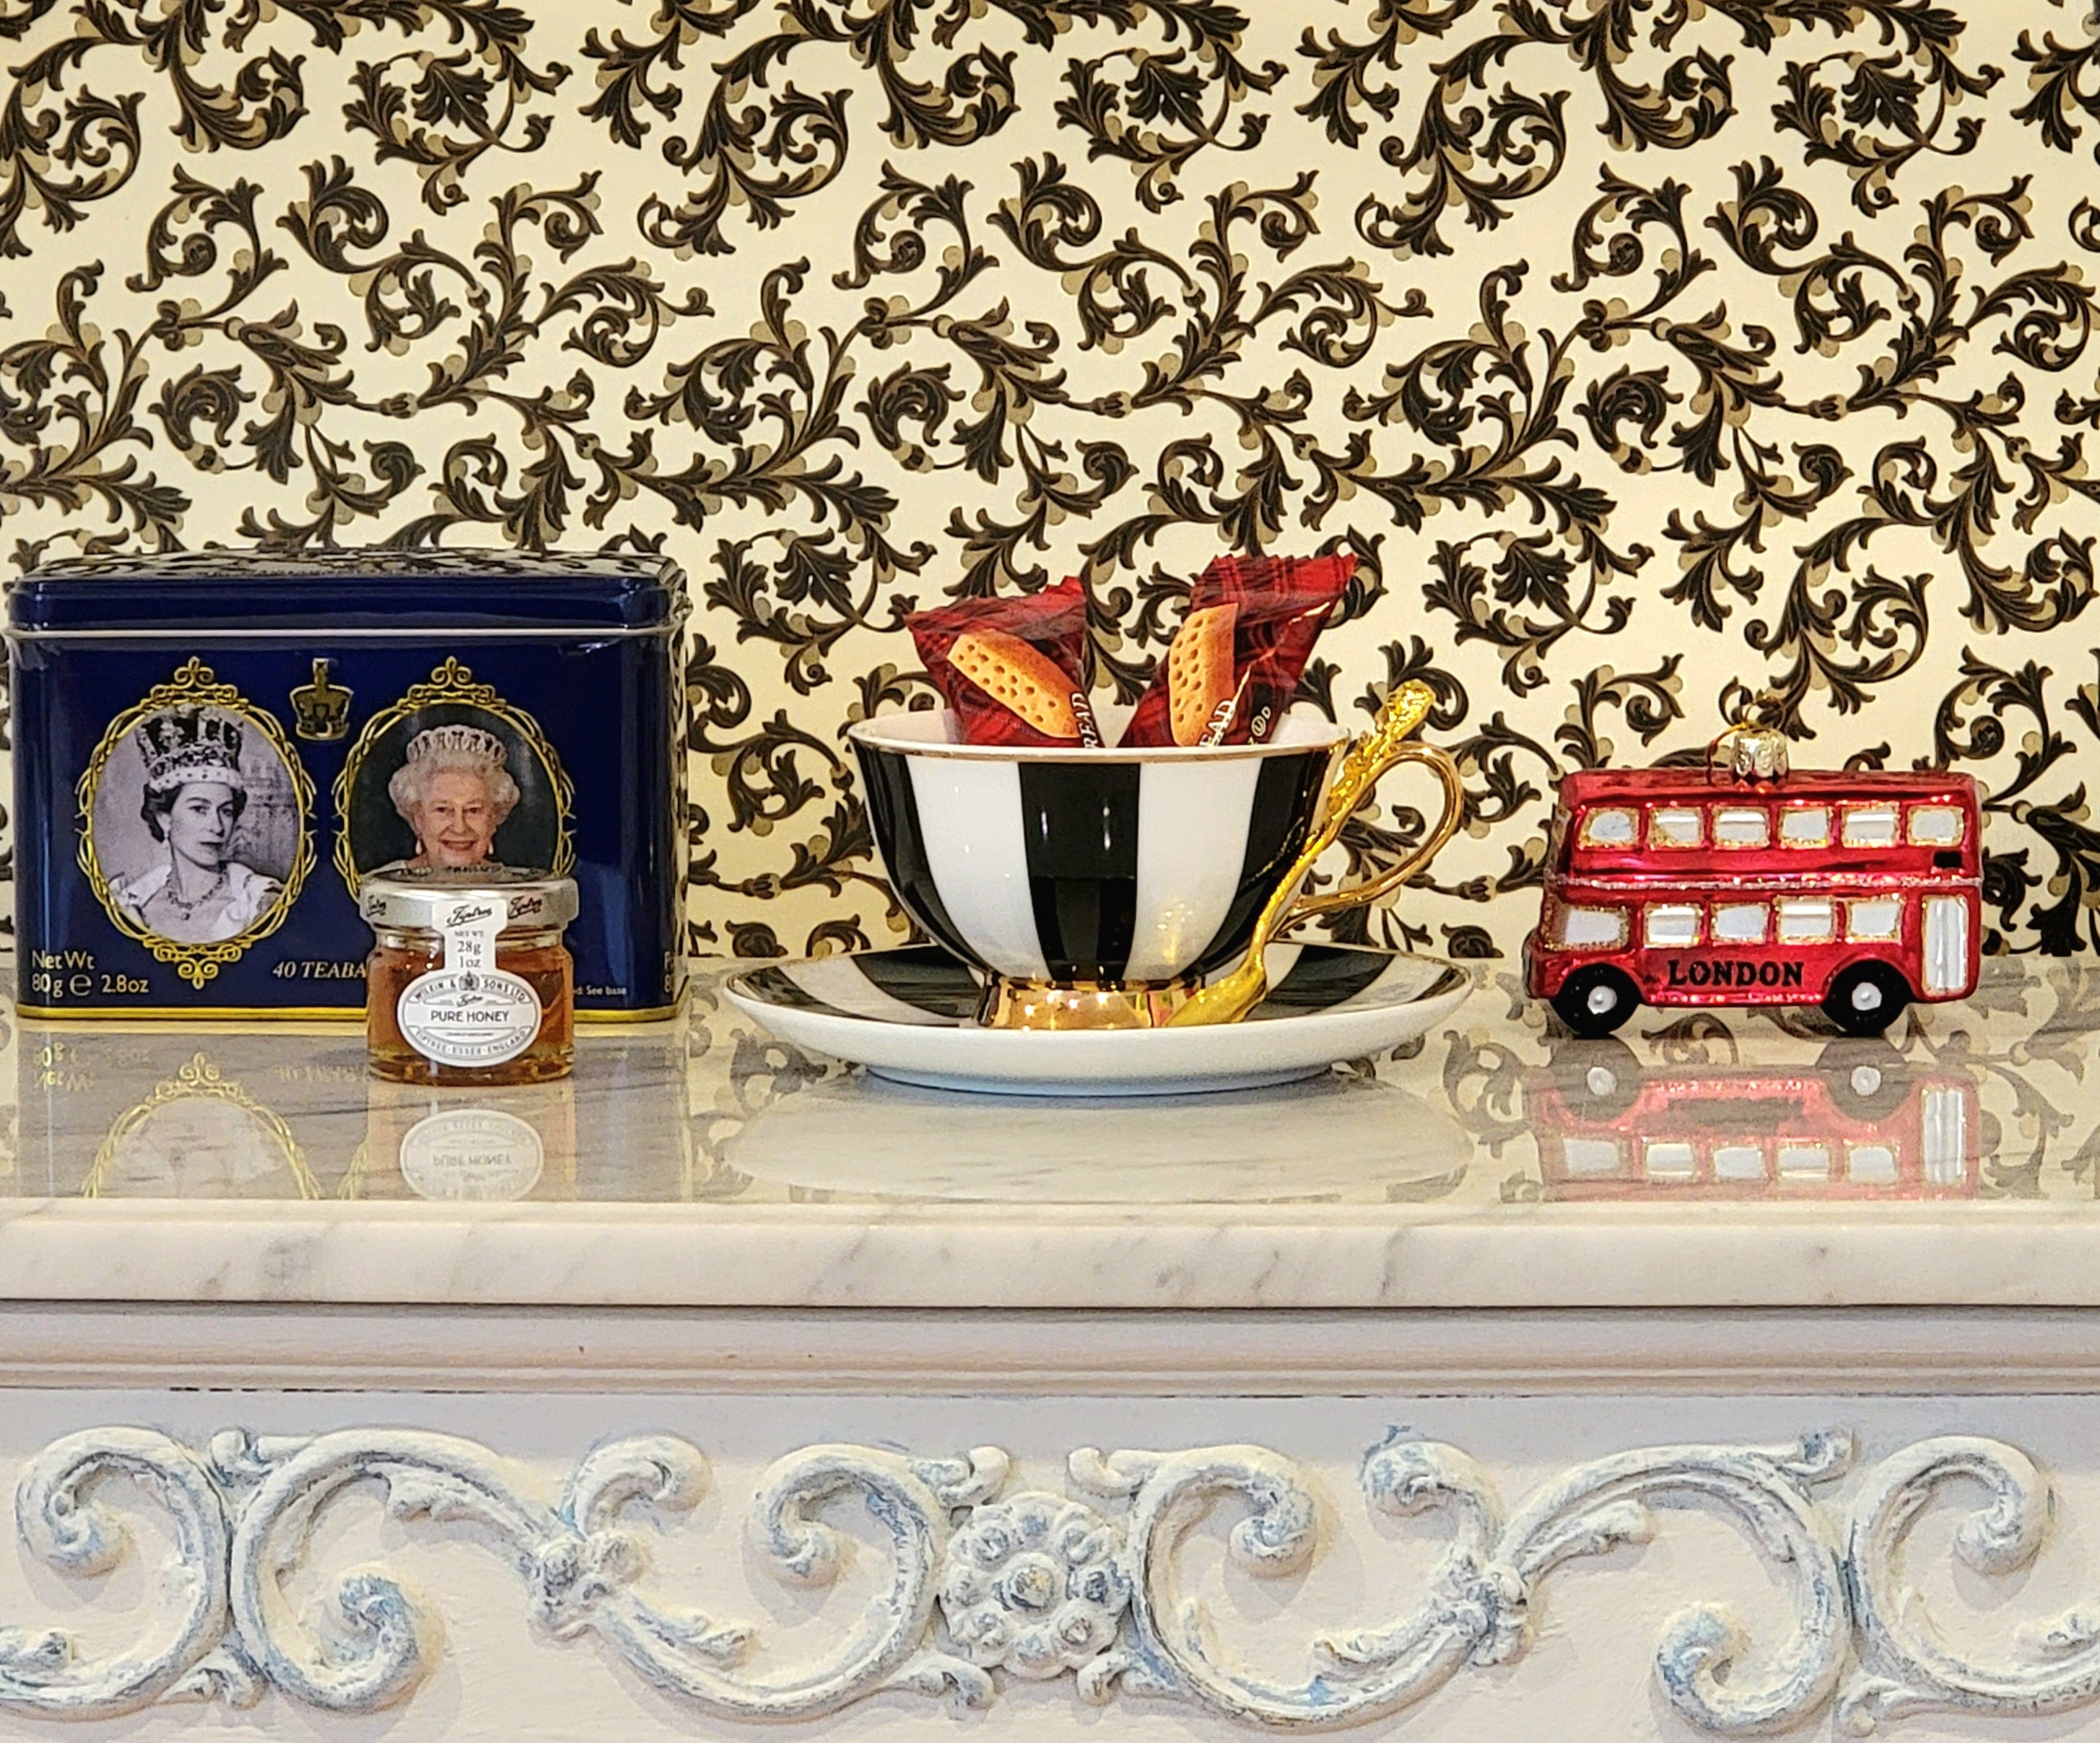 The Queen's Tea Time